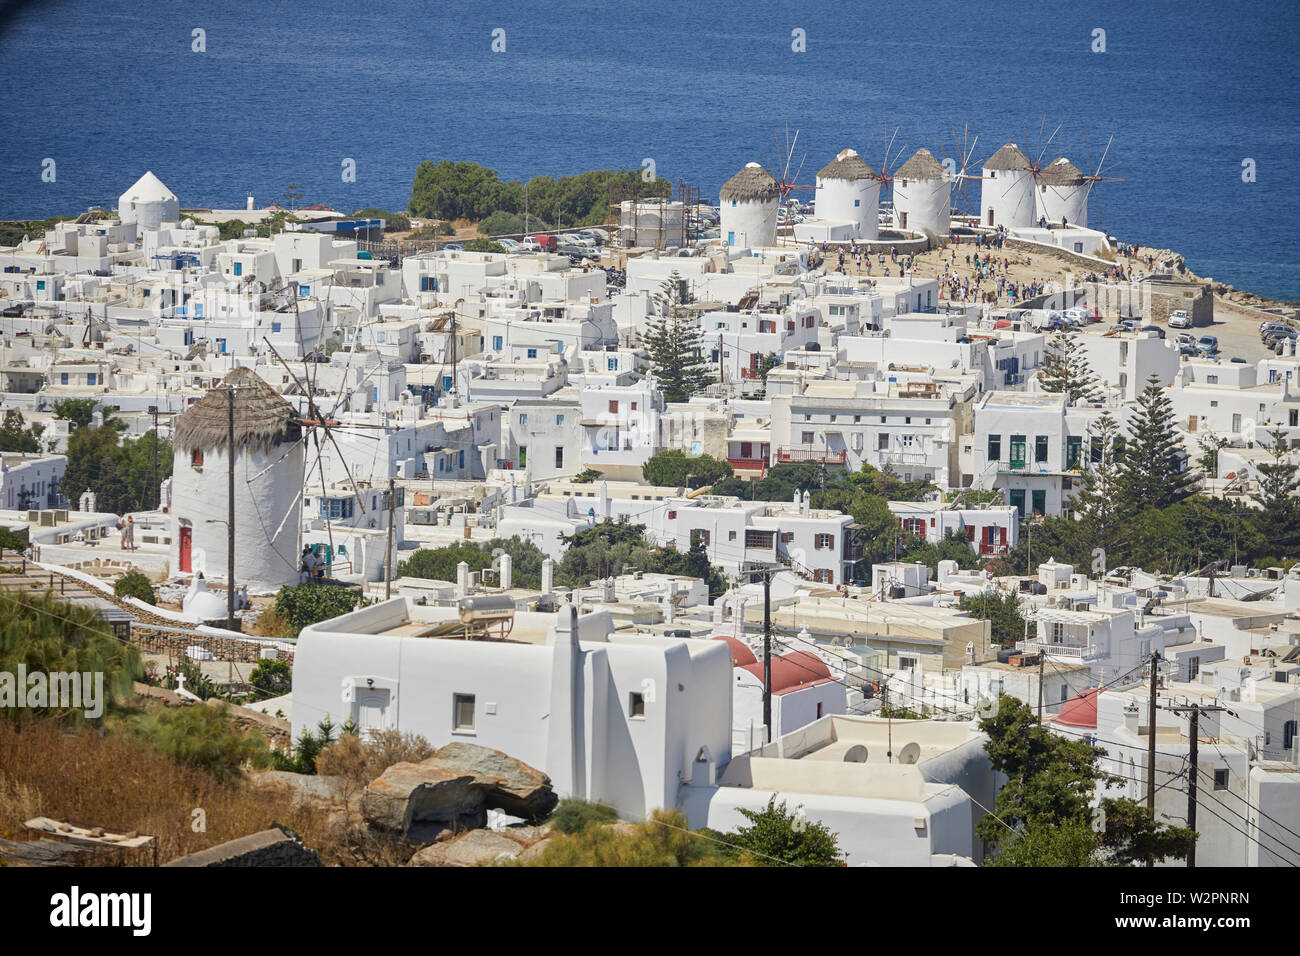 Mykonos, mikonos Greek island, part of the Cyclades, Greece. souk